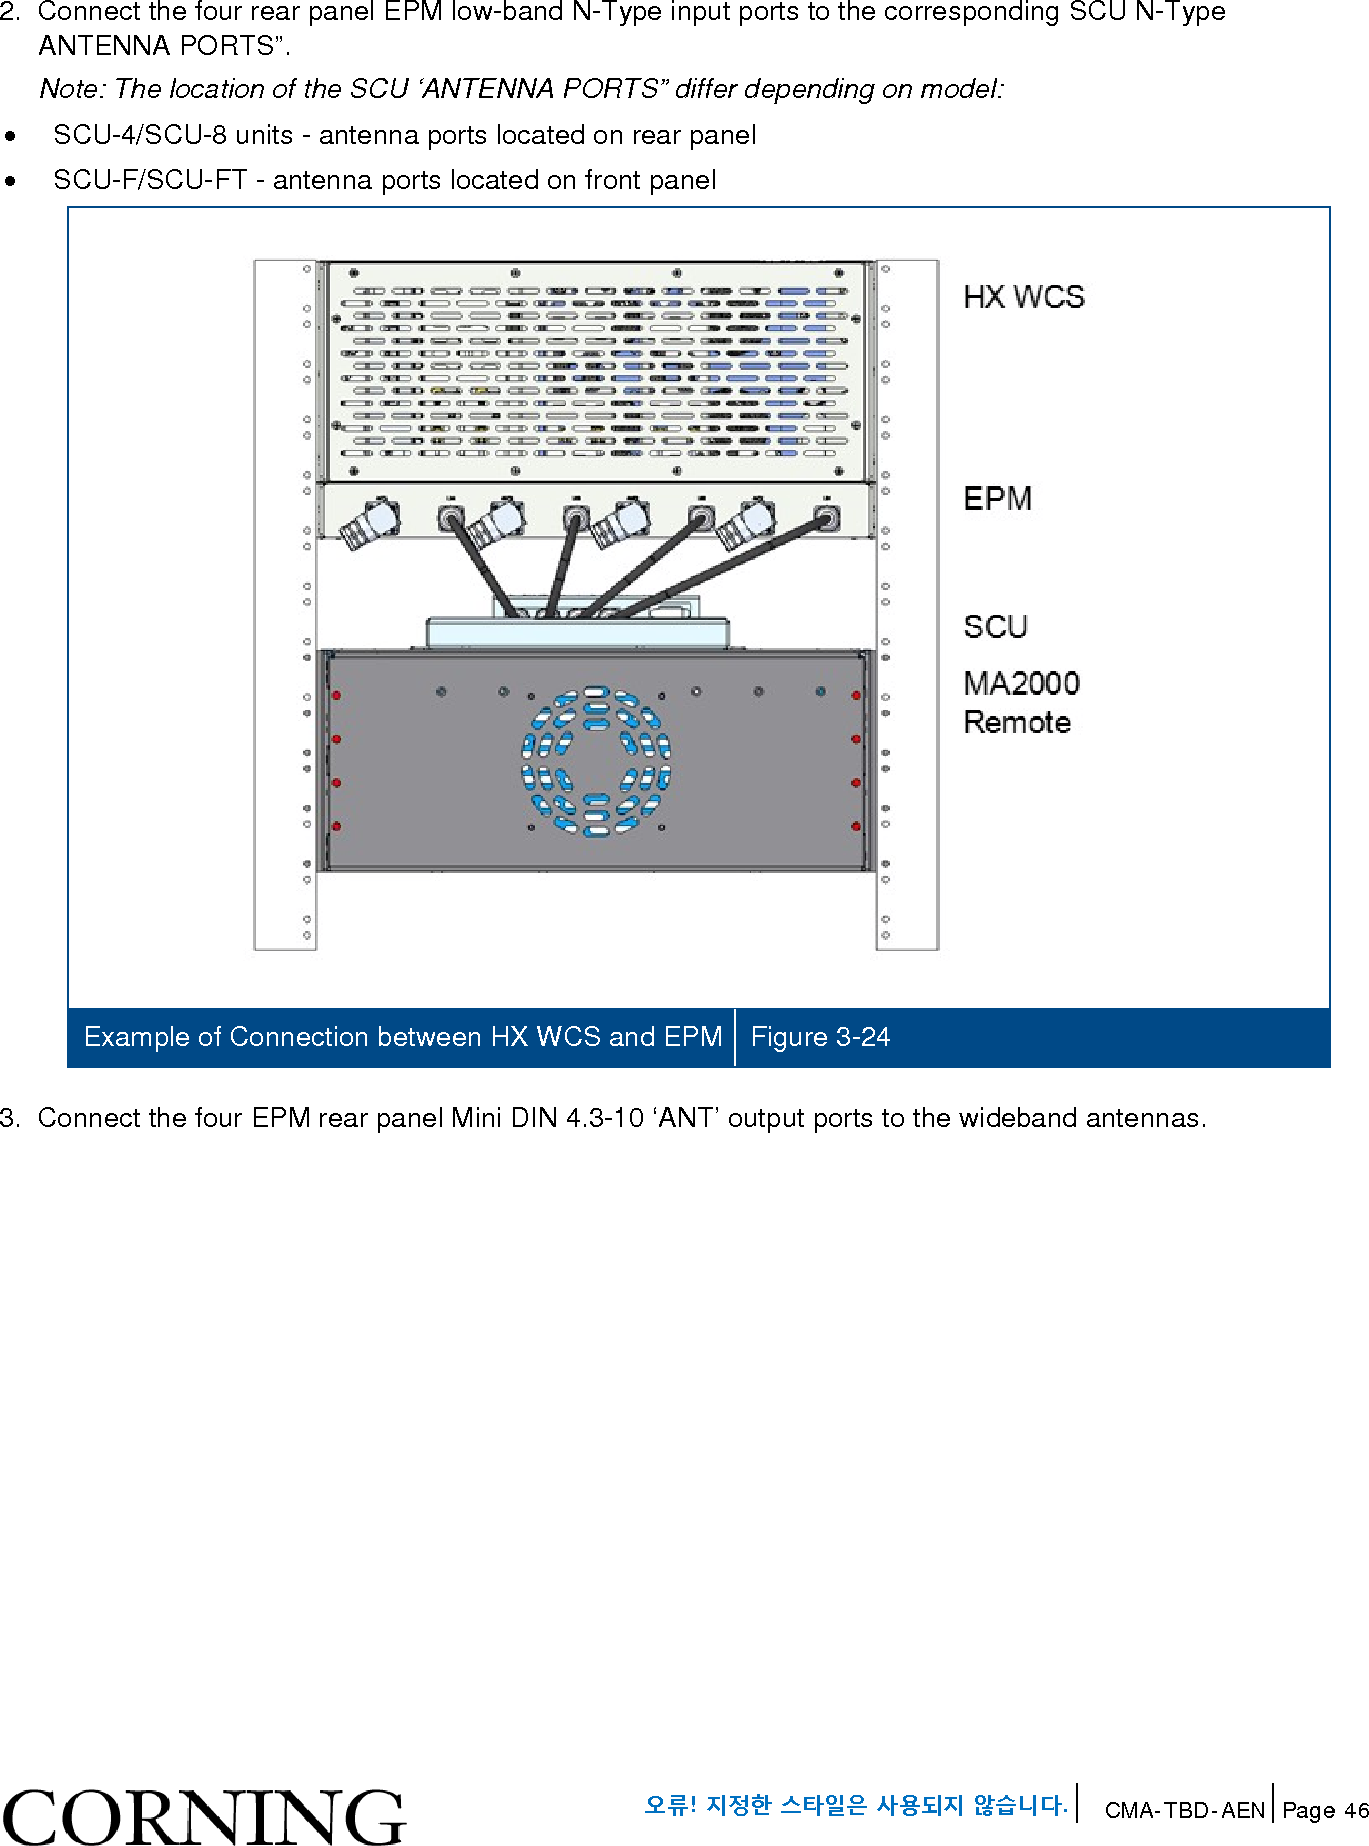 Page 46 of Corning Optical Communication HX-WCS-MIMO Optical RepeaterModel name - HX-WCS-MIMO User Manual HX WCS